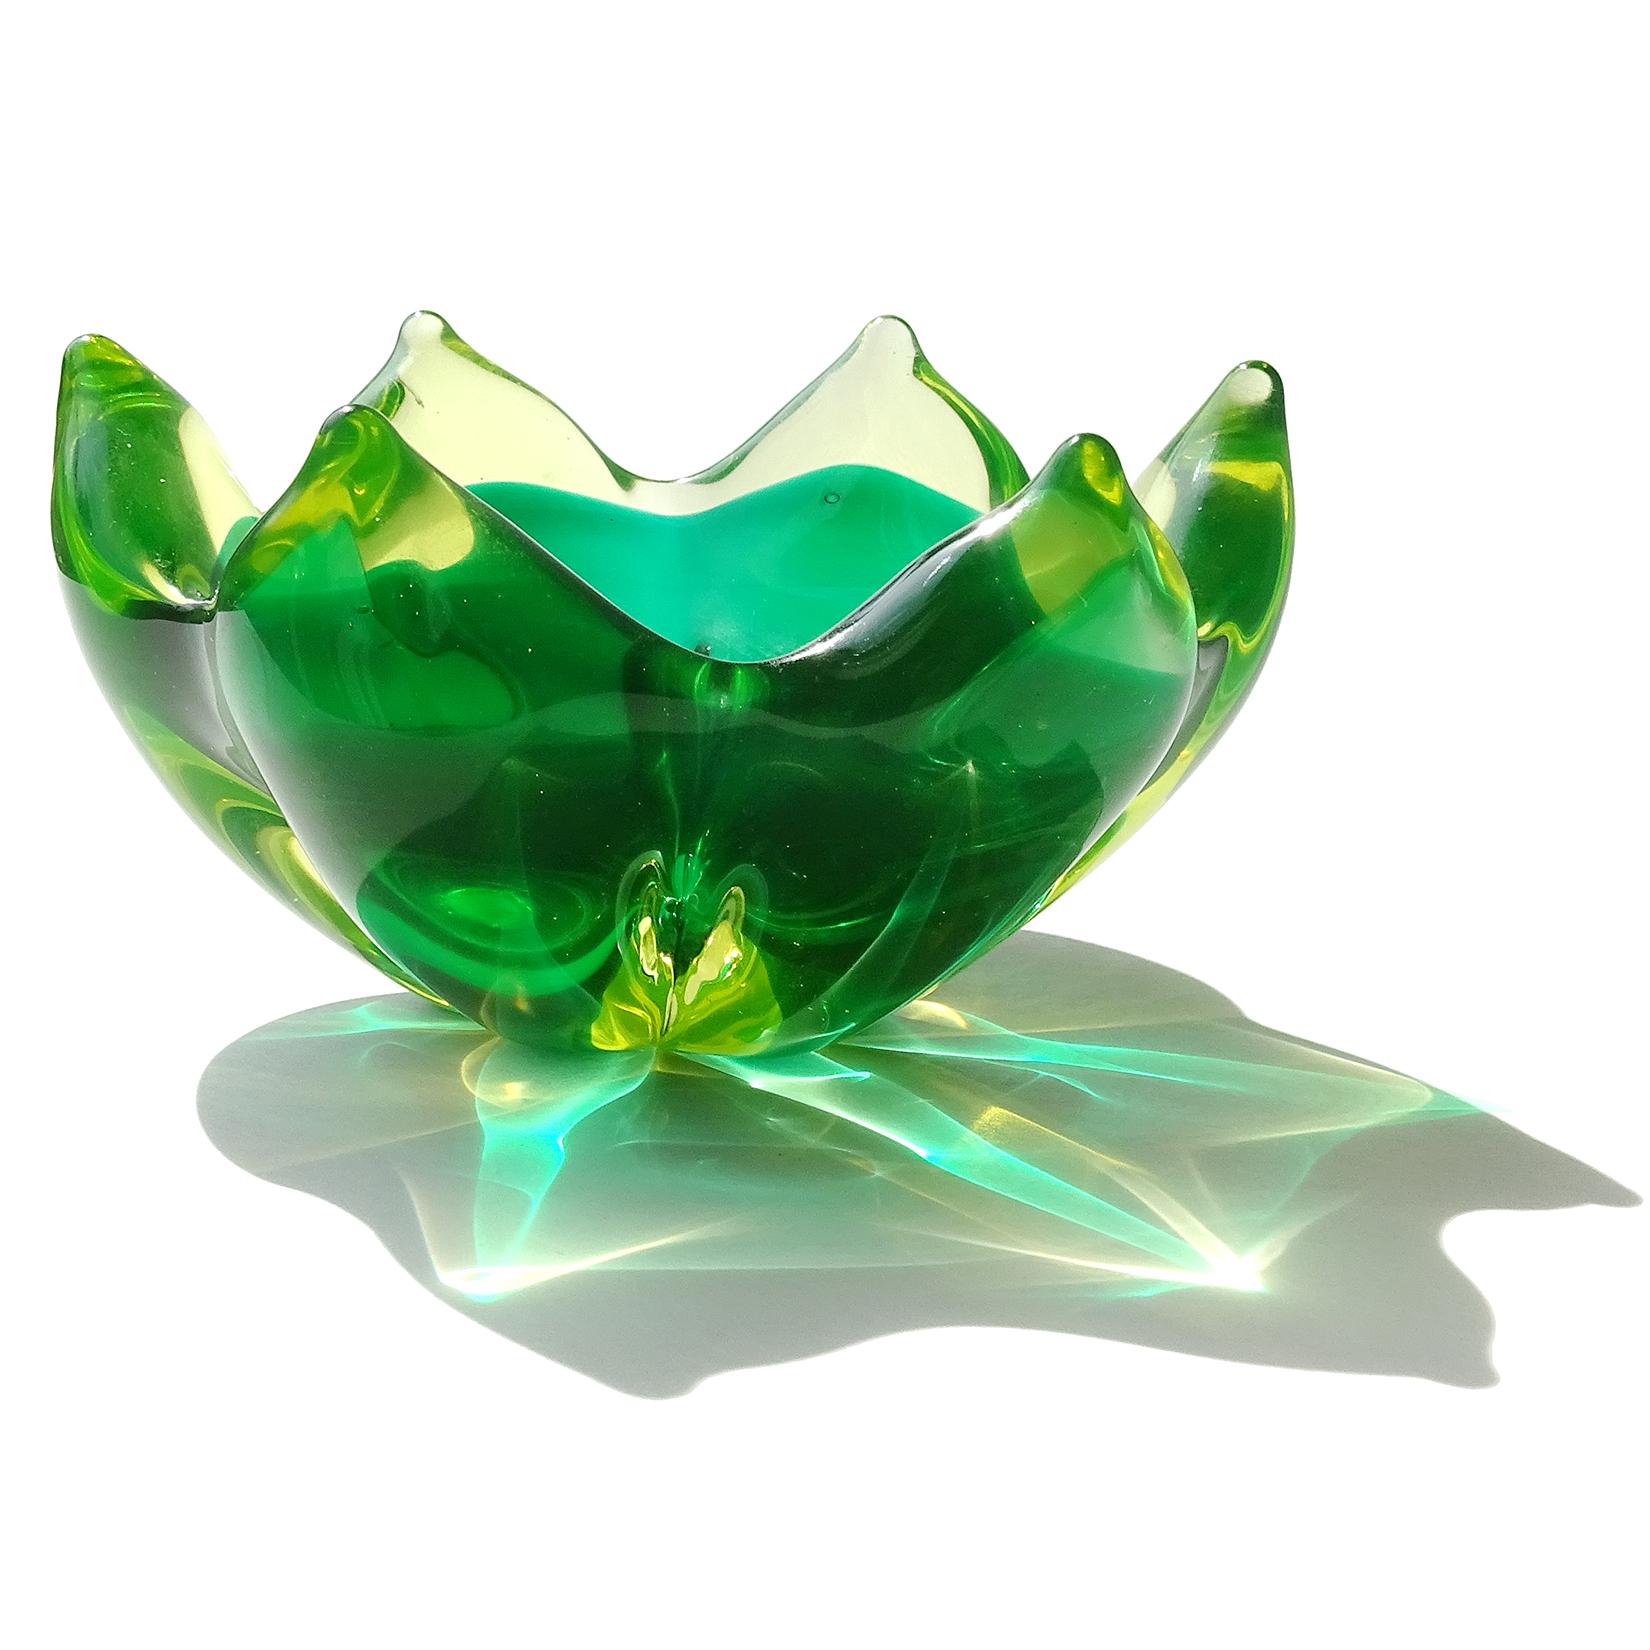 green glowing glass